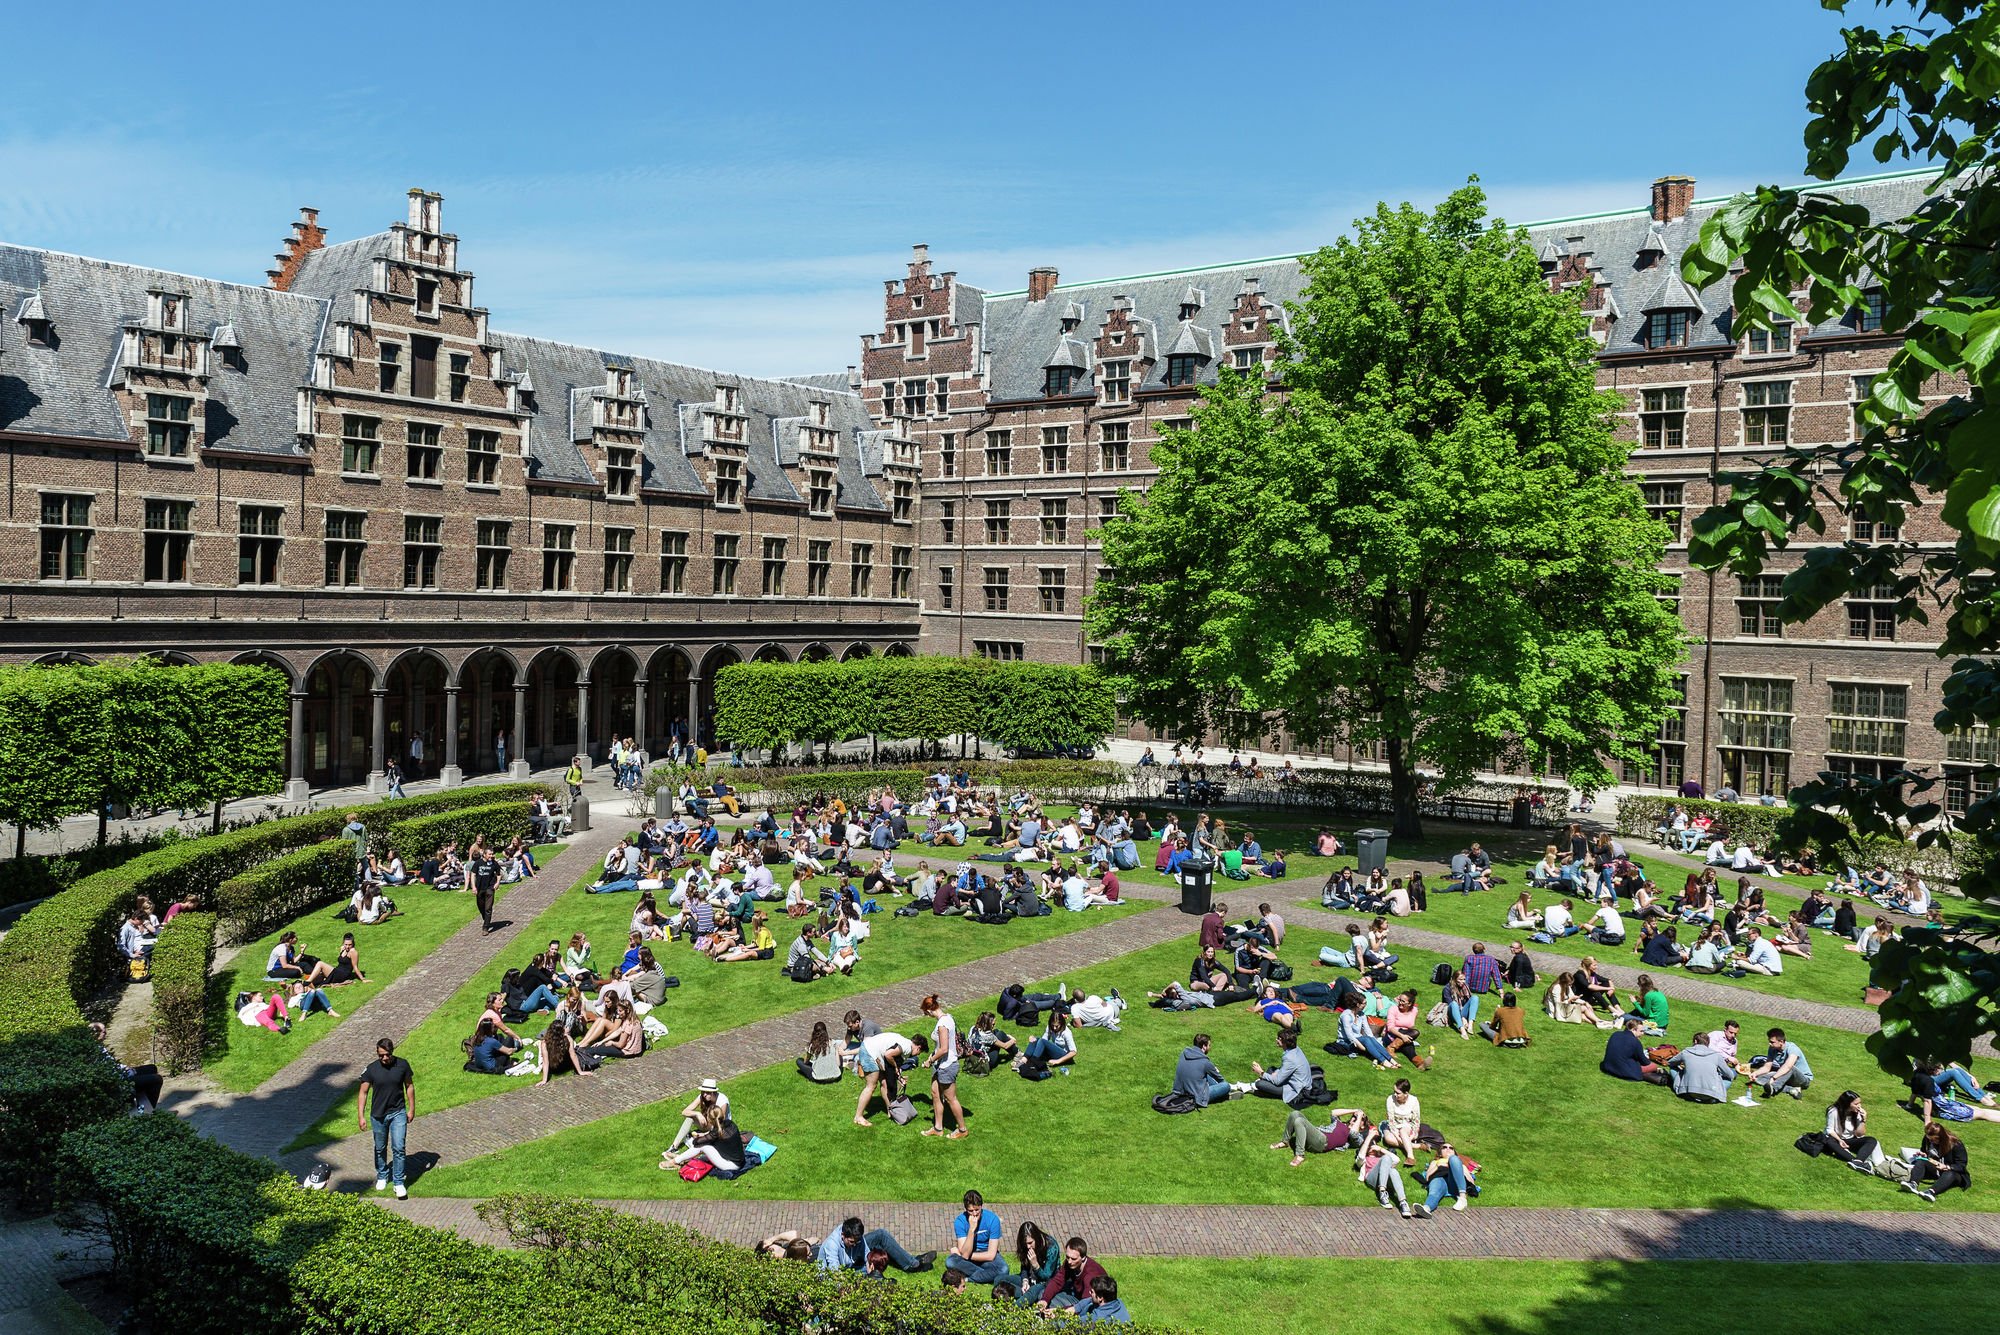 University of Antwerpen, Faculty of Business and Economics